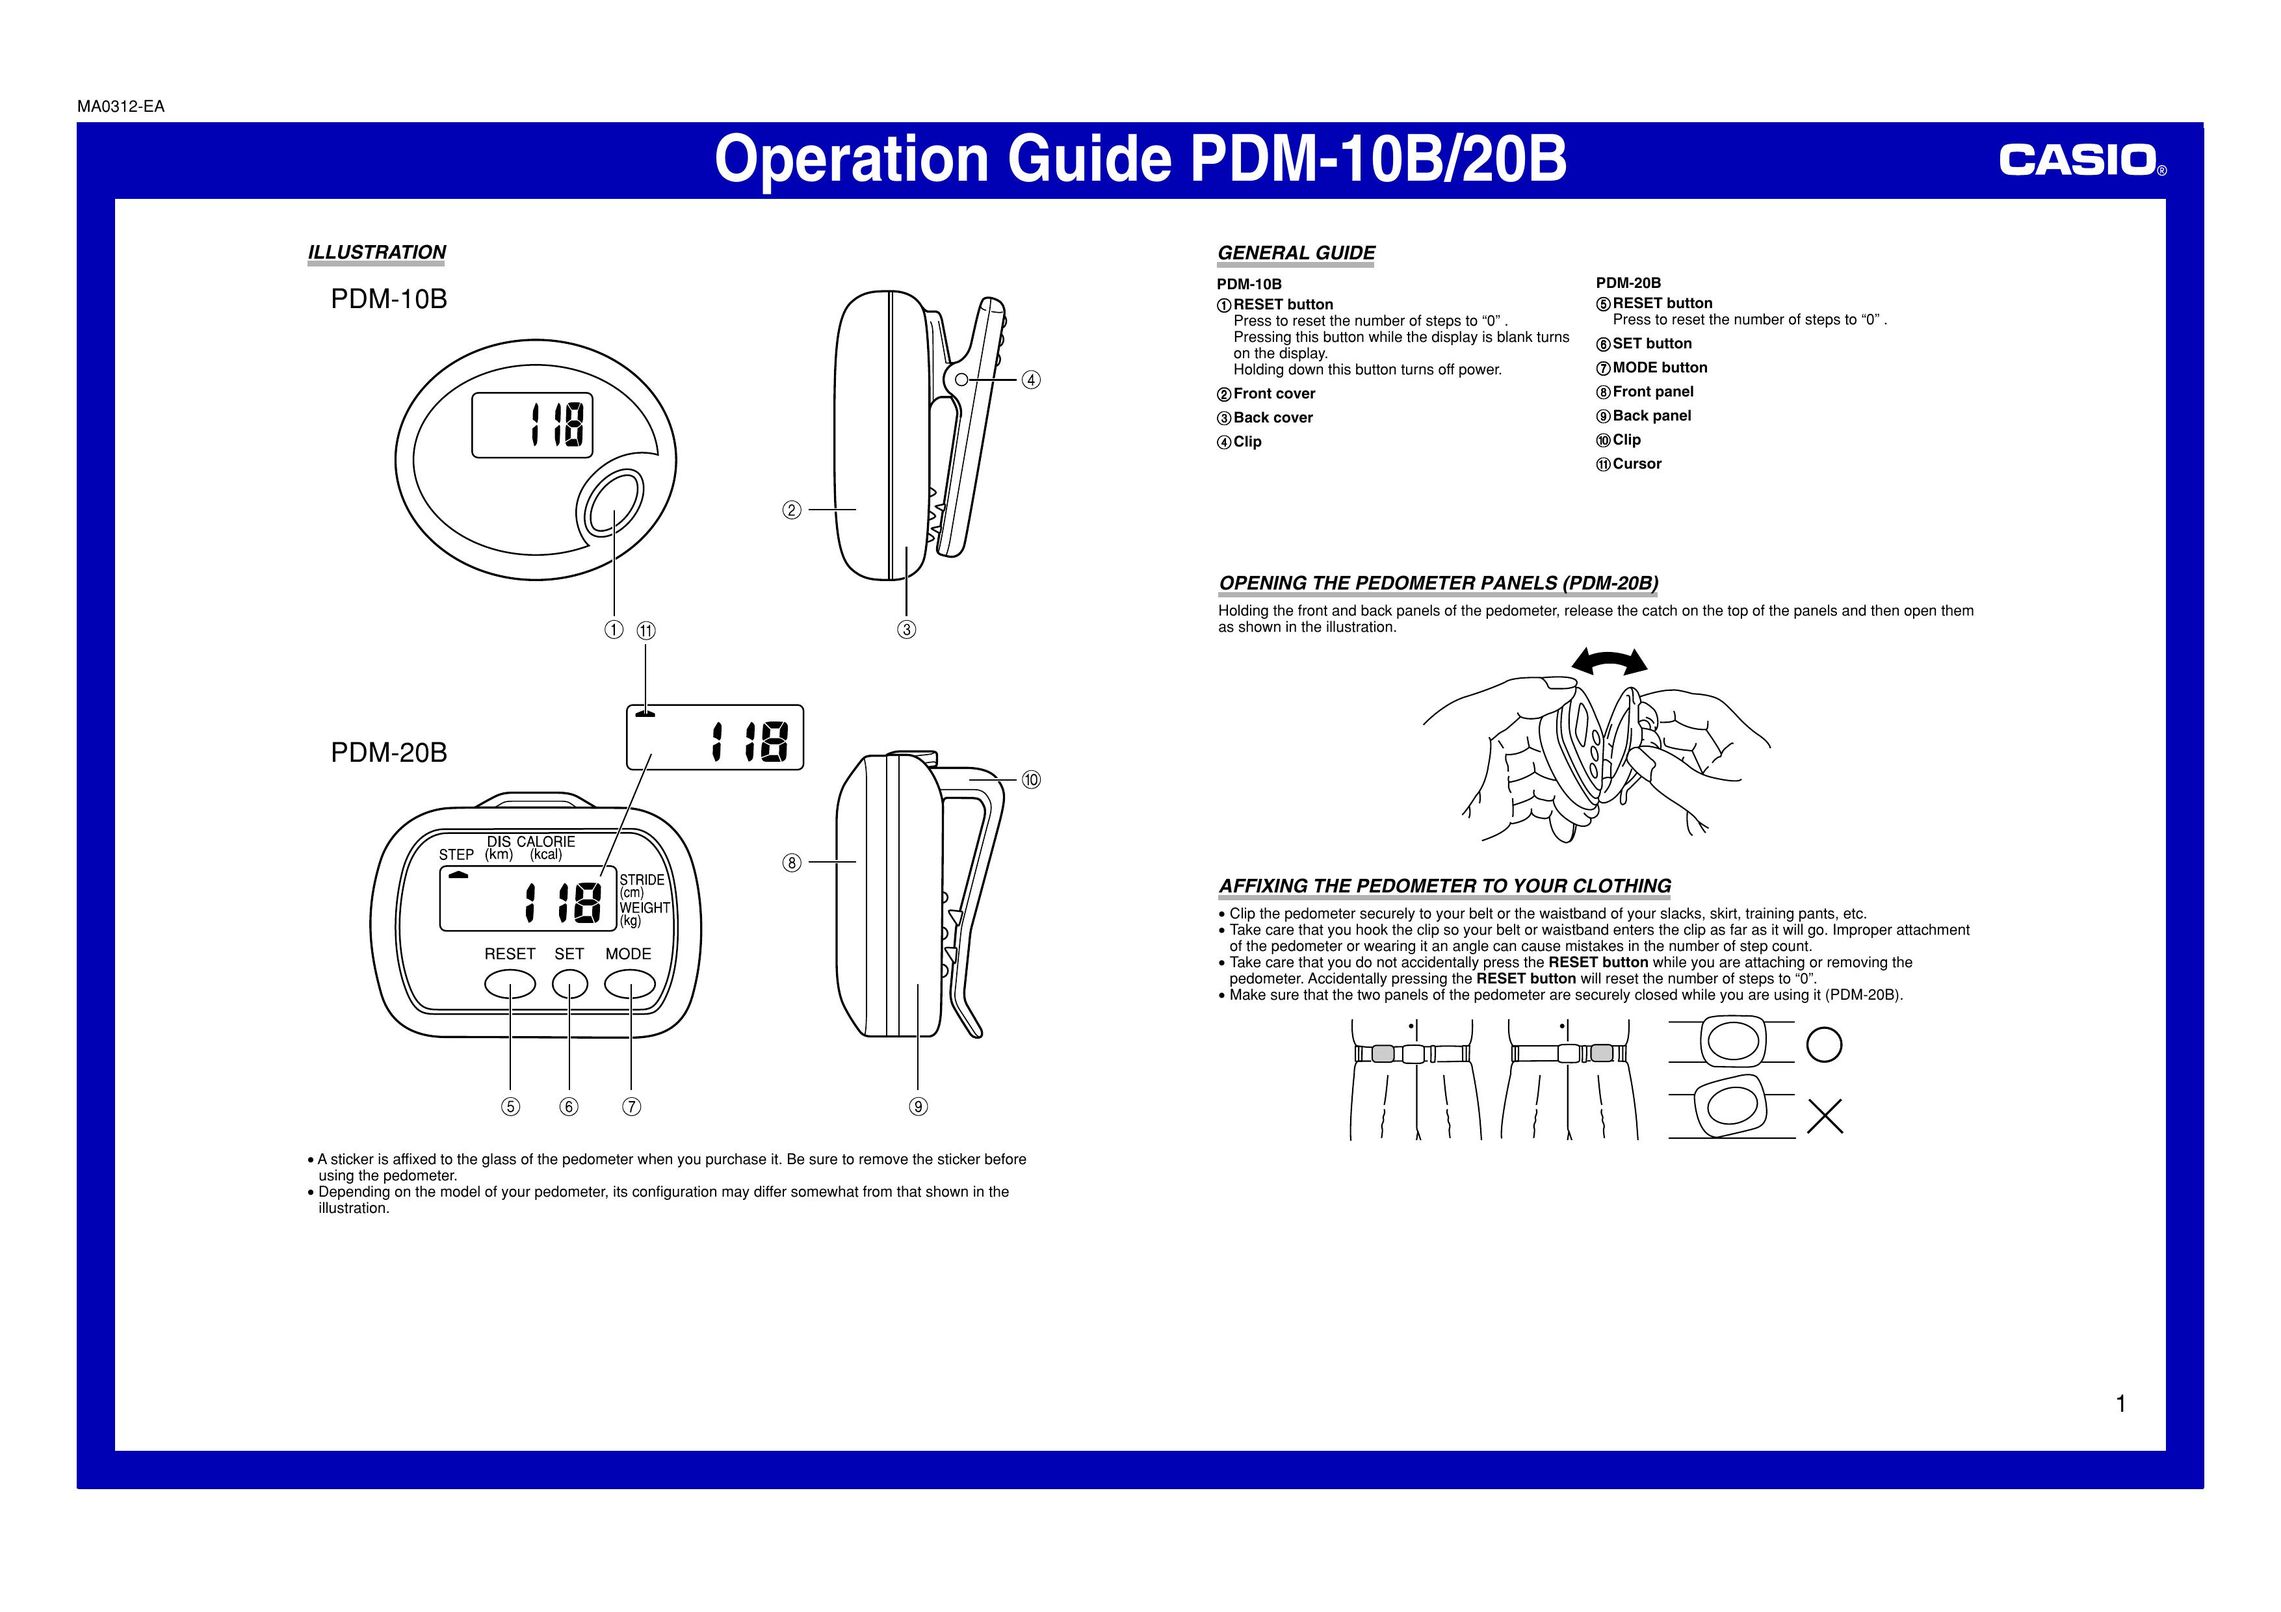 Casio PDM-10B Fitness Electronics User Manual